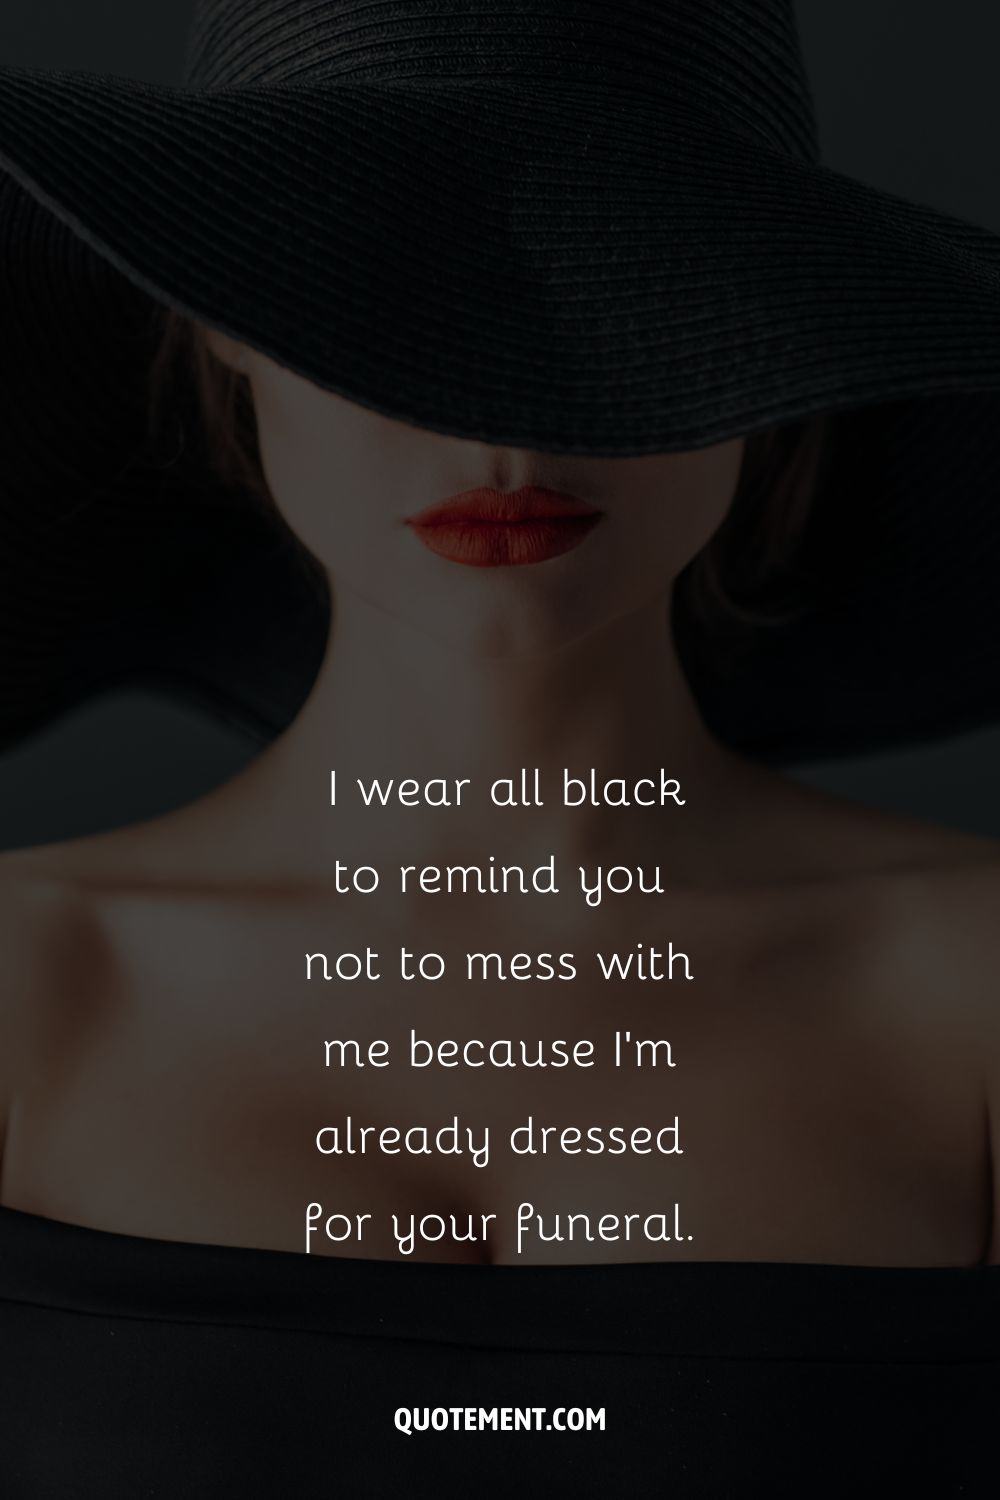 Sensual red lips peeking from black hat representing wearing black caption.